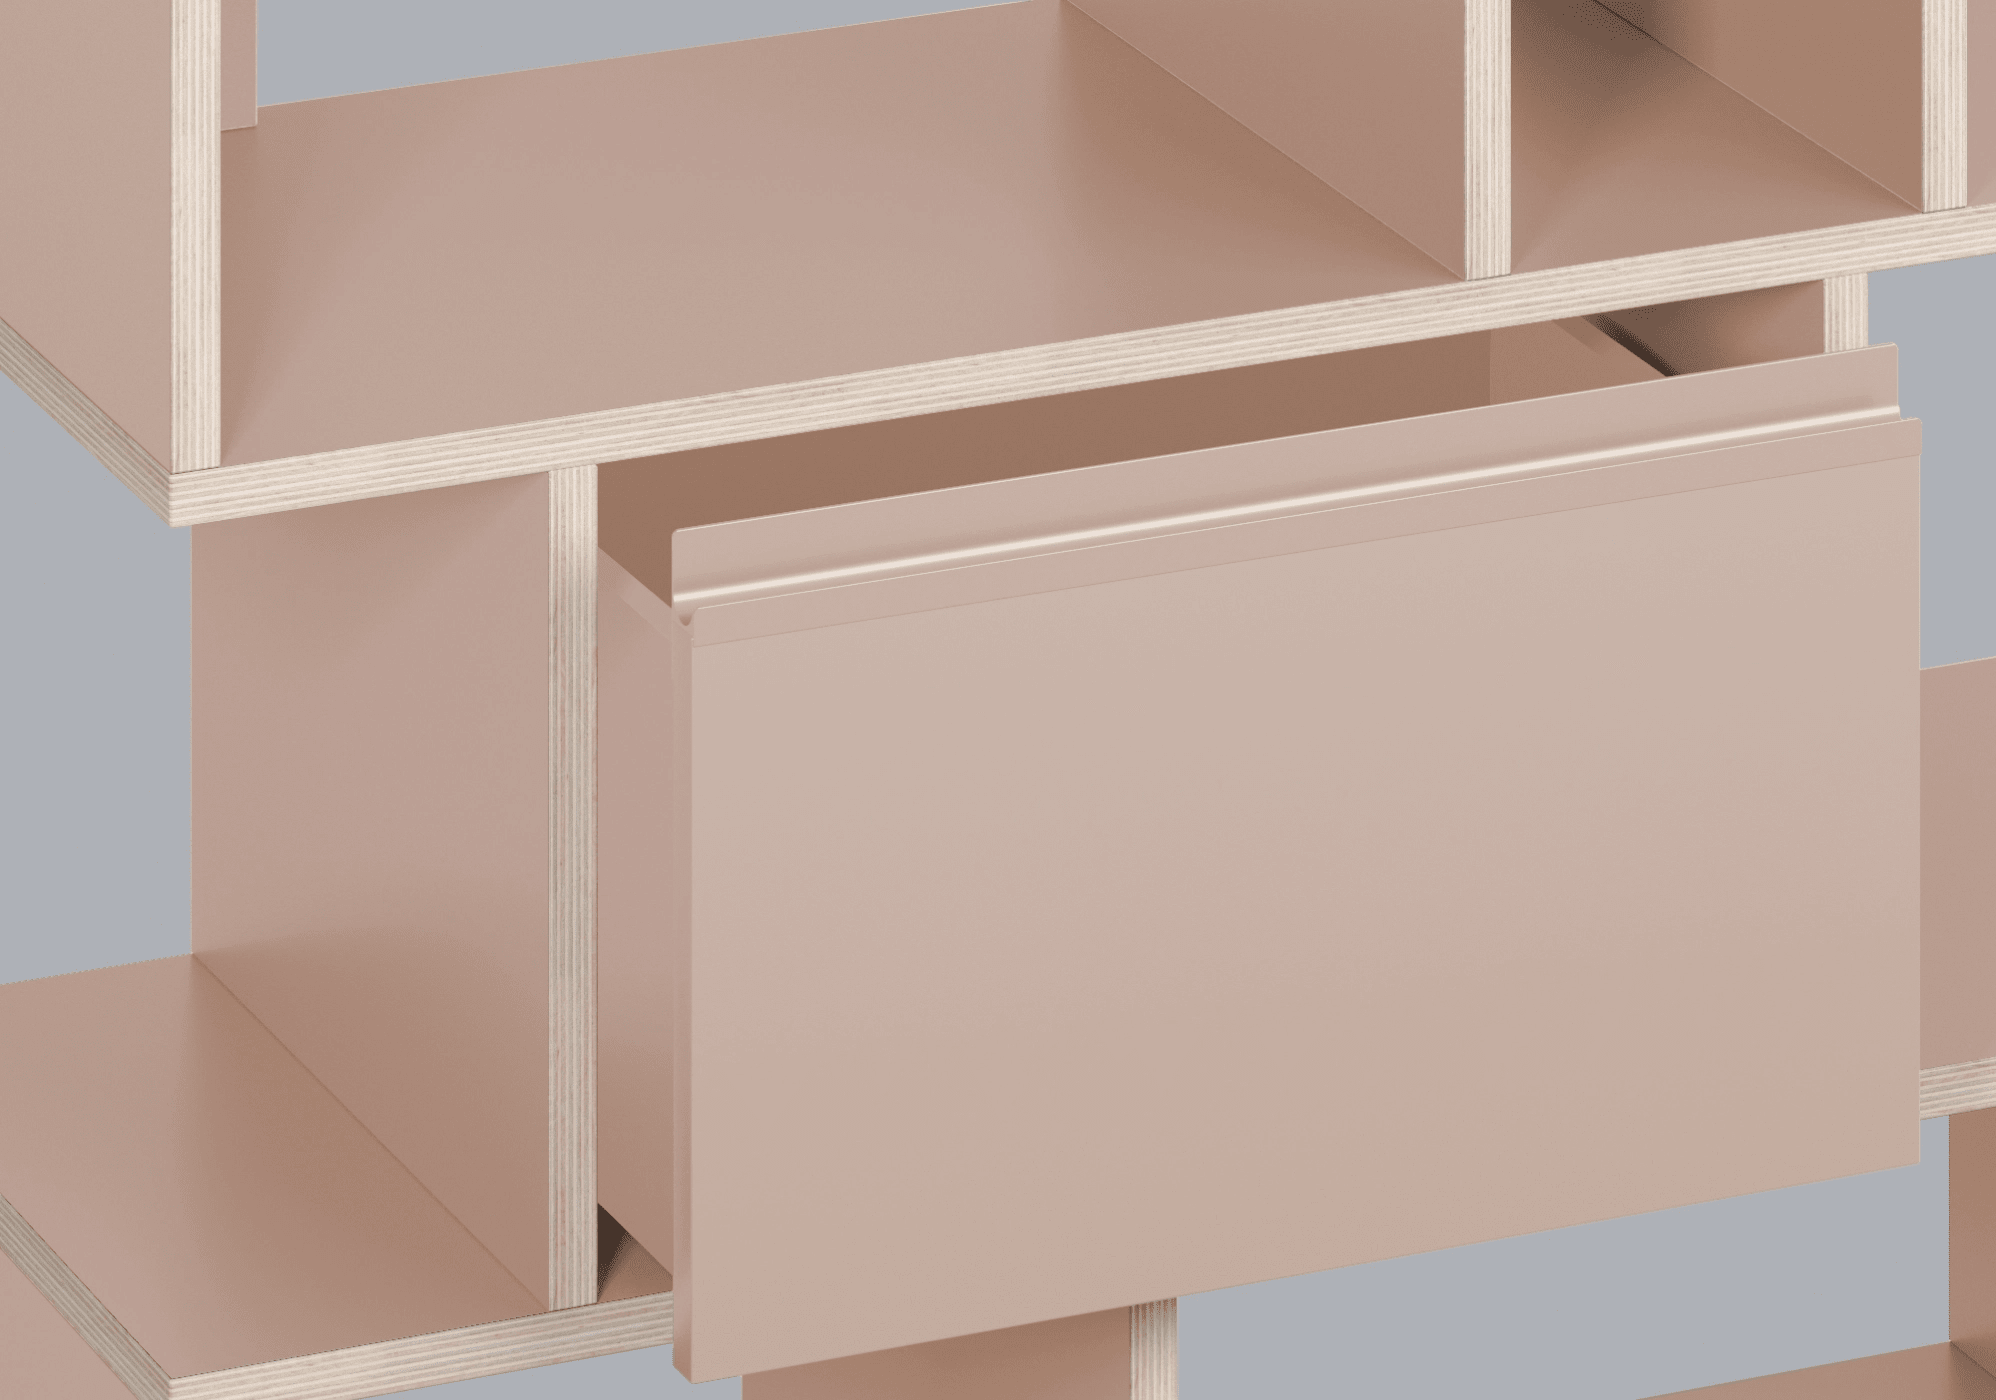 Grosses Puderrosa Multiplexplatte Schuhregal mit Türen und Schubladen multiplexplatten - 143x123x32cm 8